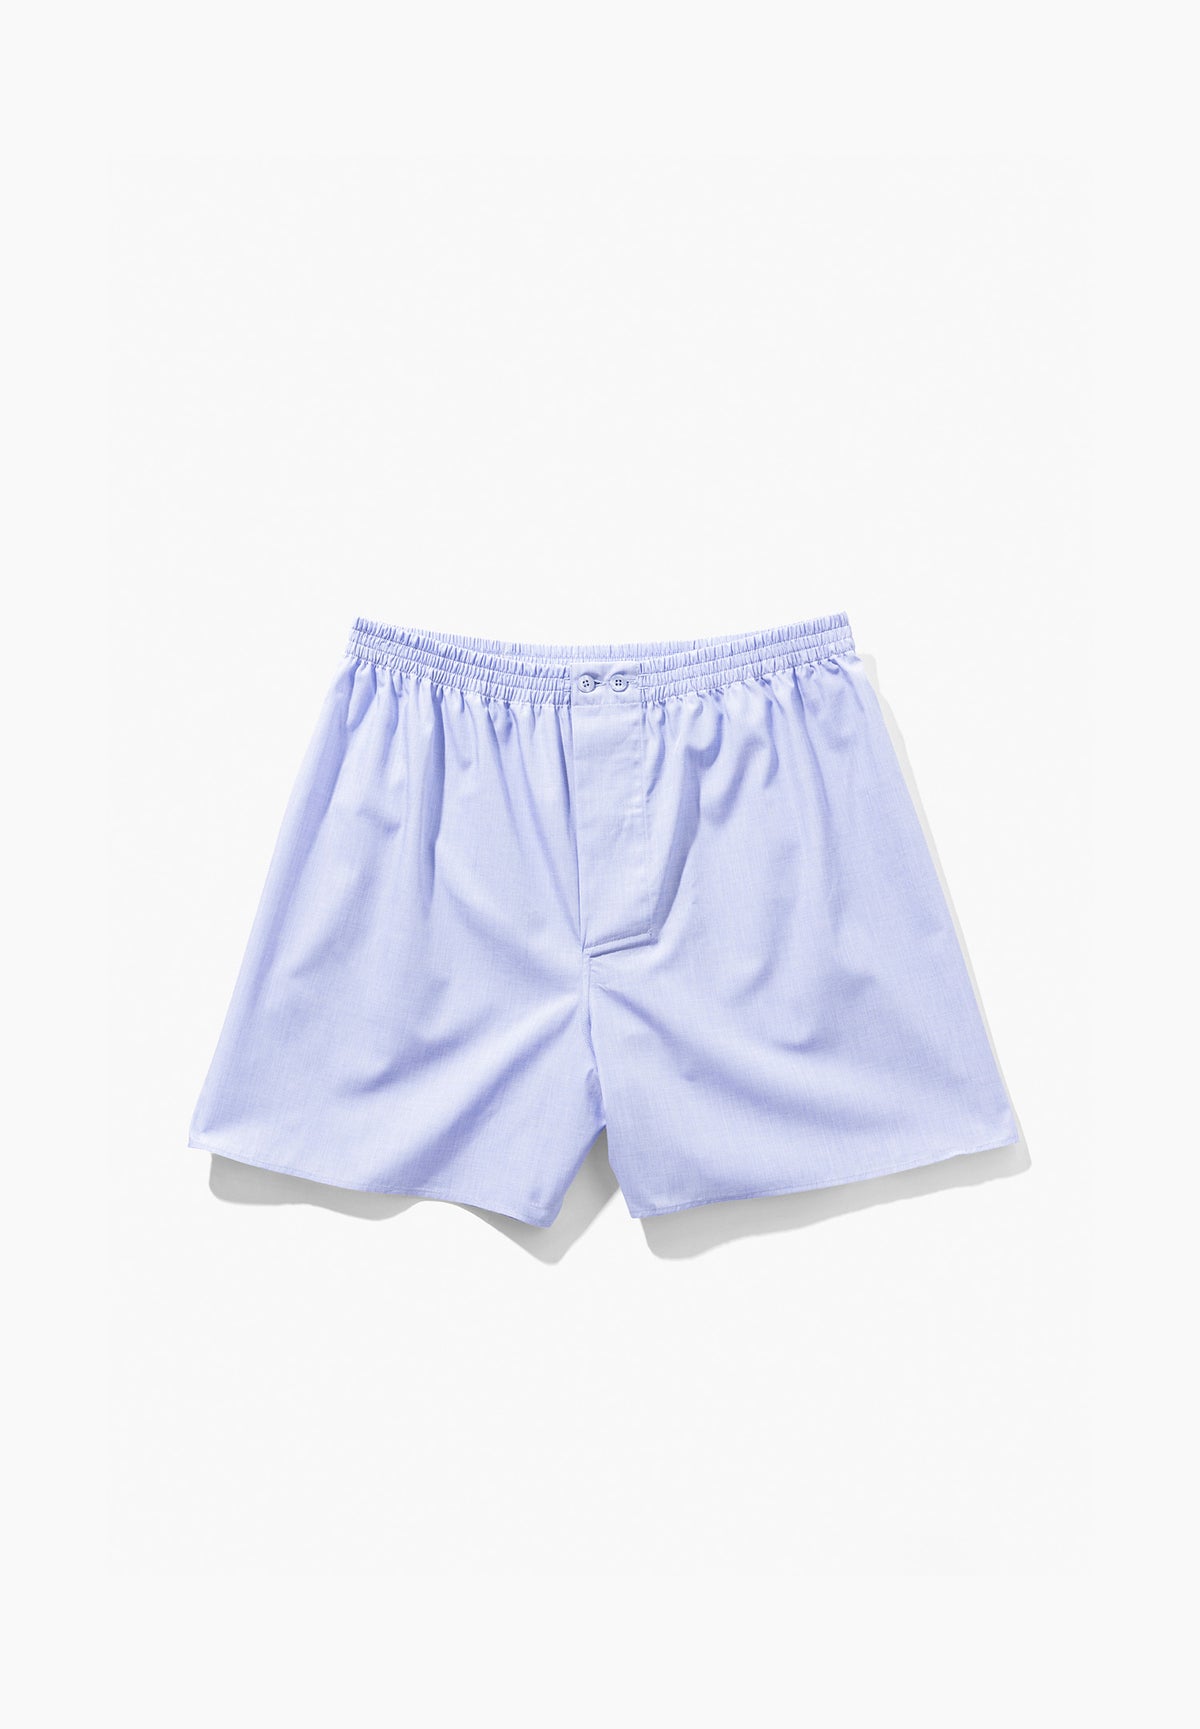 Woven Nightwear | Boxer Shorts - light blue